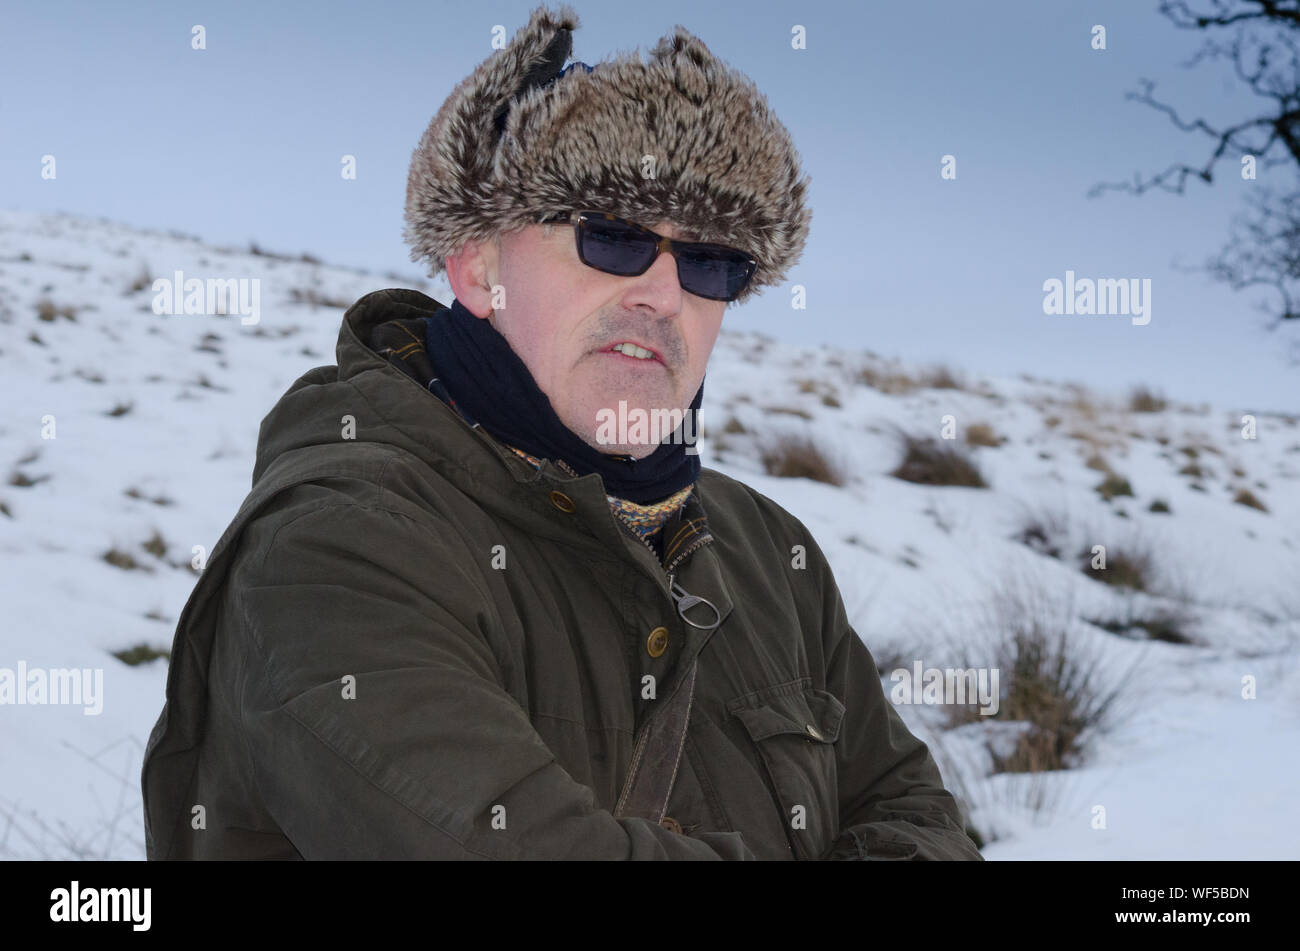 Man Wearing Fur Deerstalker Hat While Standing On Snowy Field Stock Photo